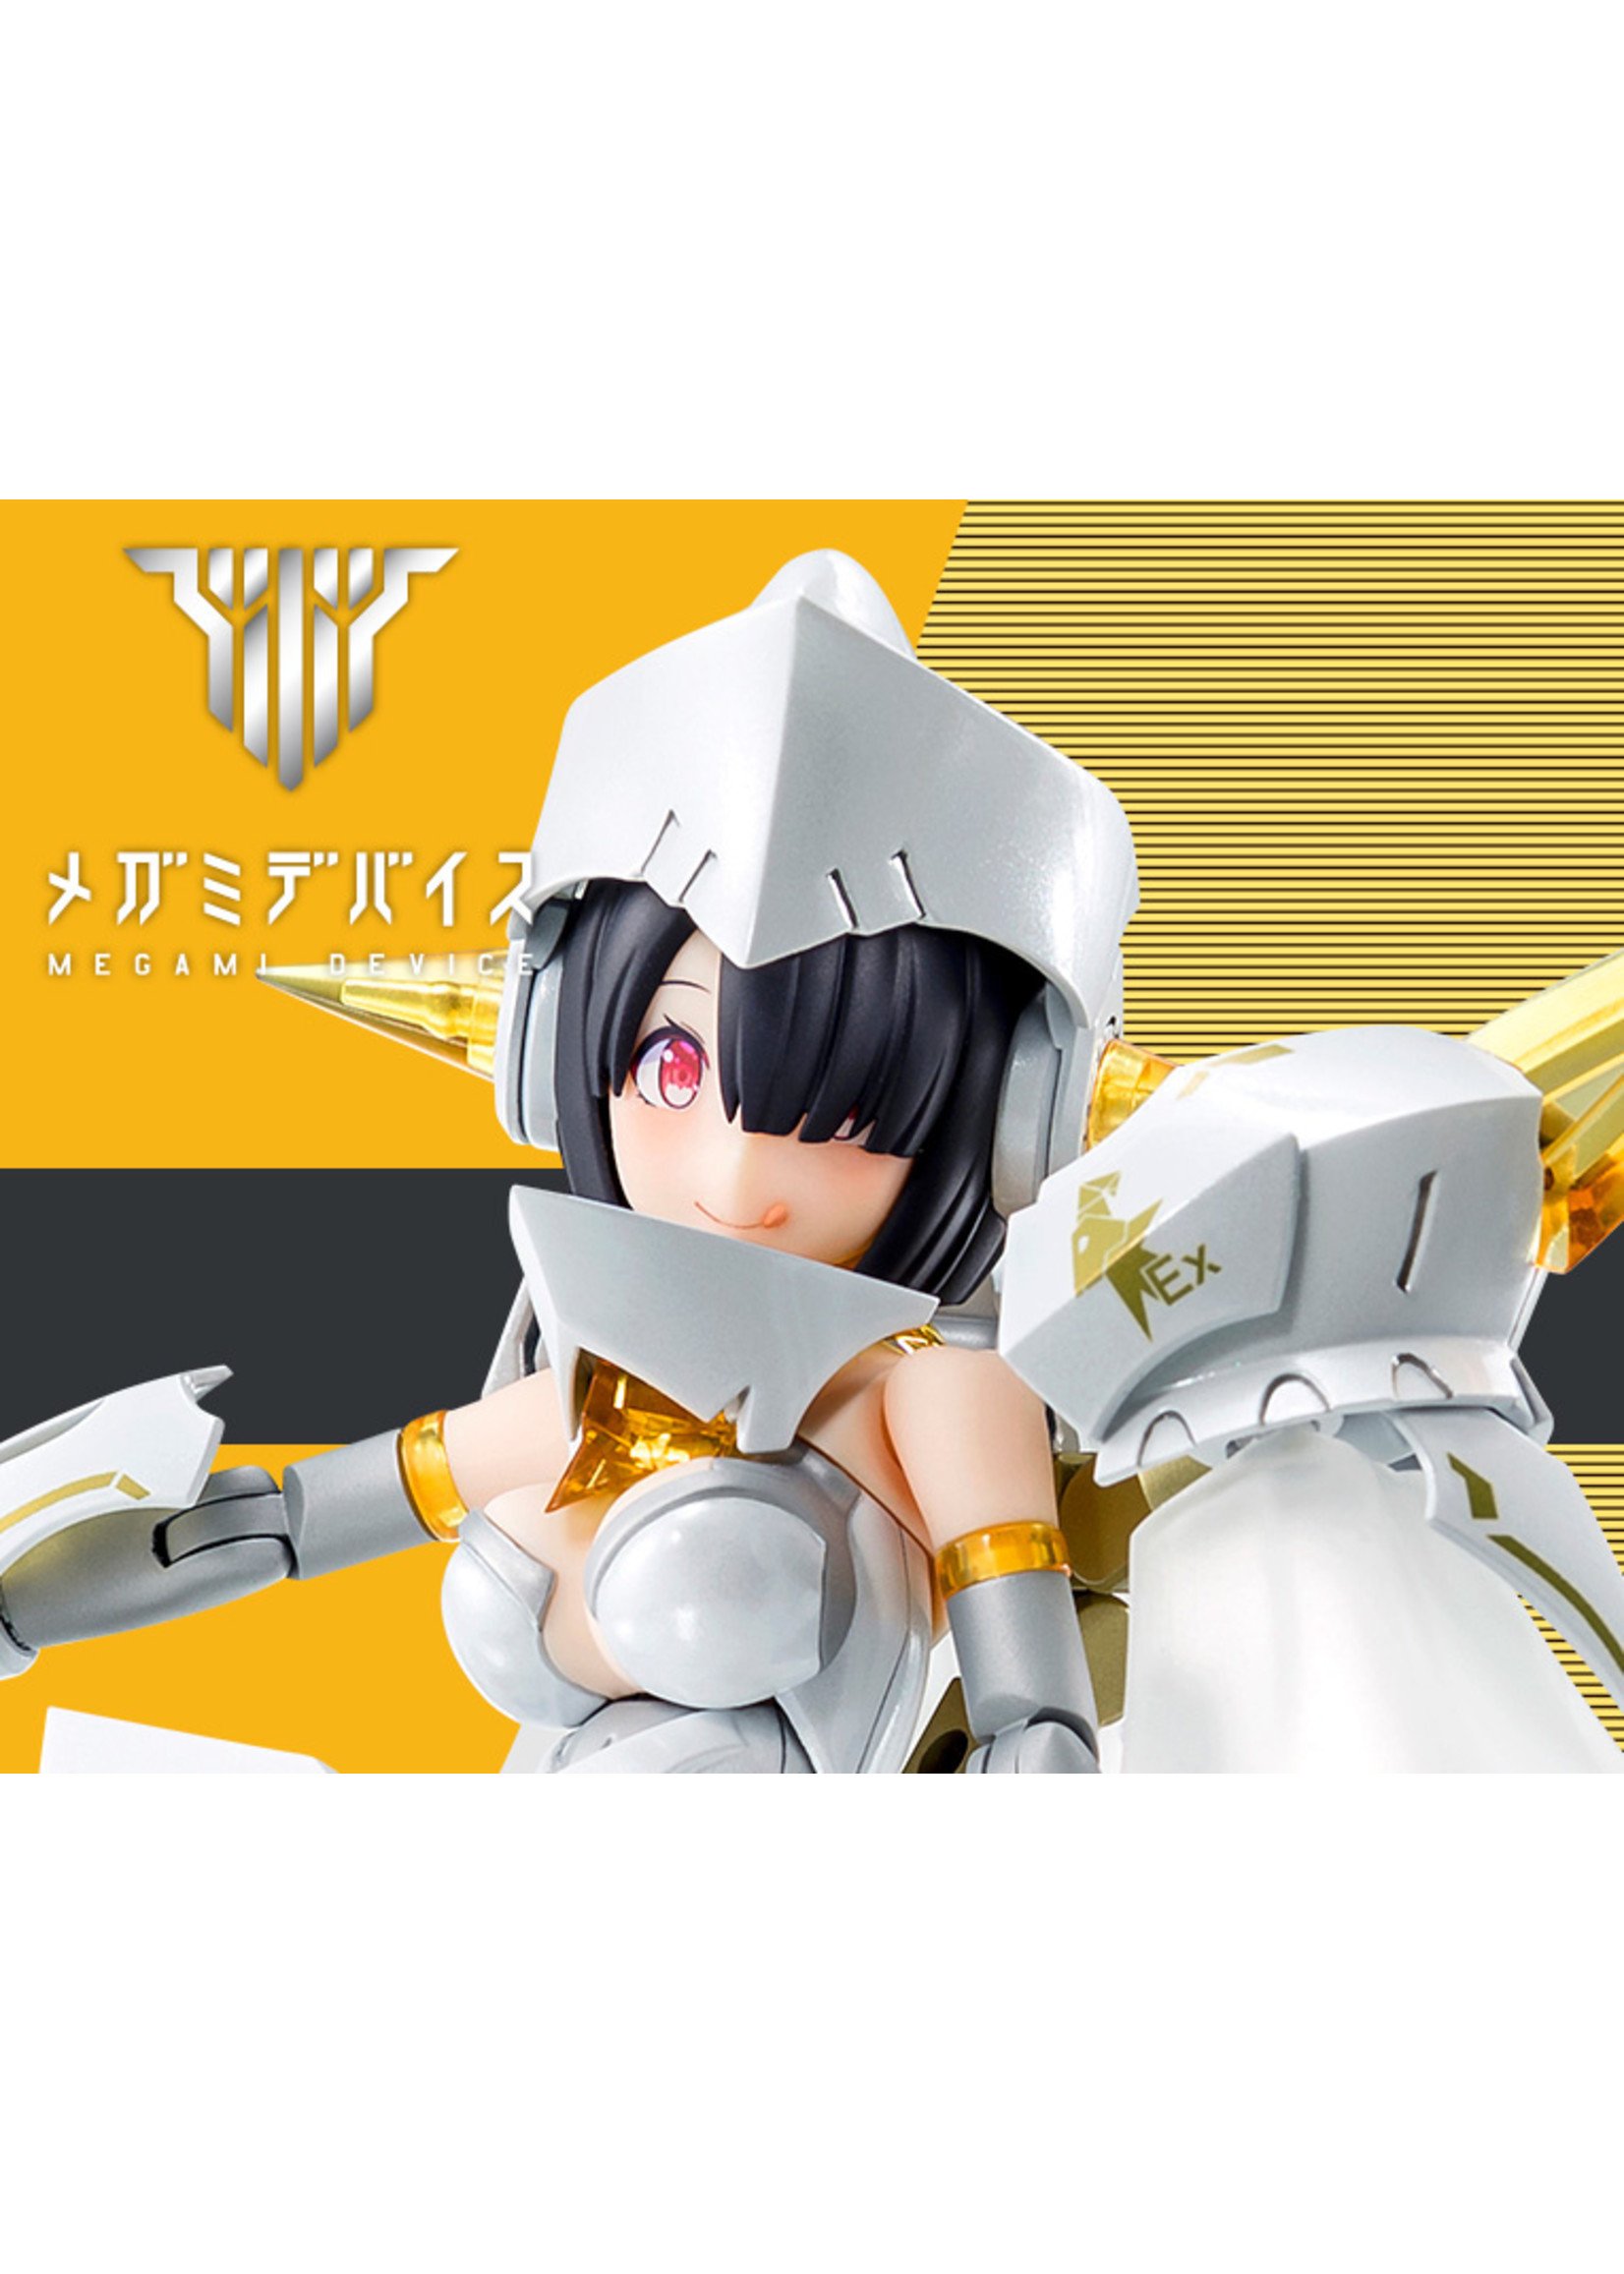 Kotobukiya KP634 - Megami Device Bullet Knights Executioner Bride